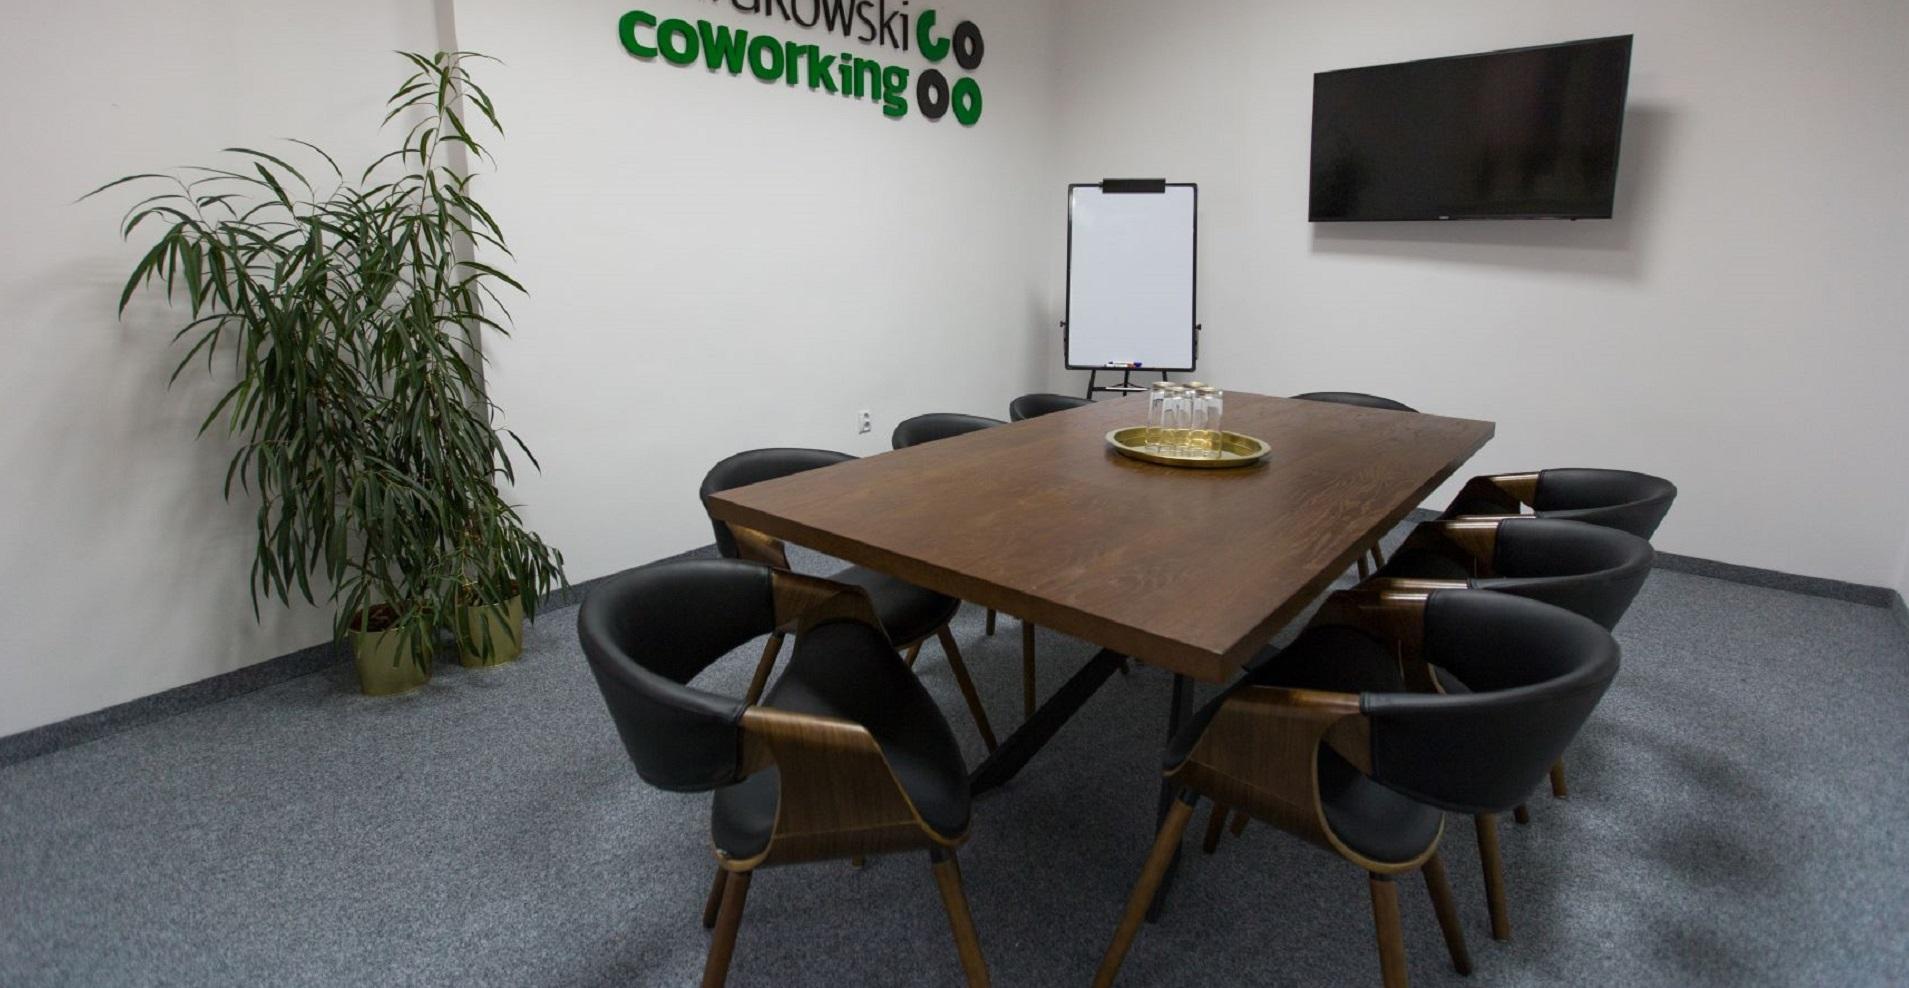 Meeting room for 8 pers. in Krakowski Coworking